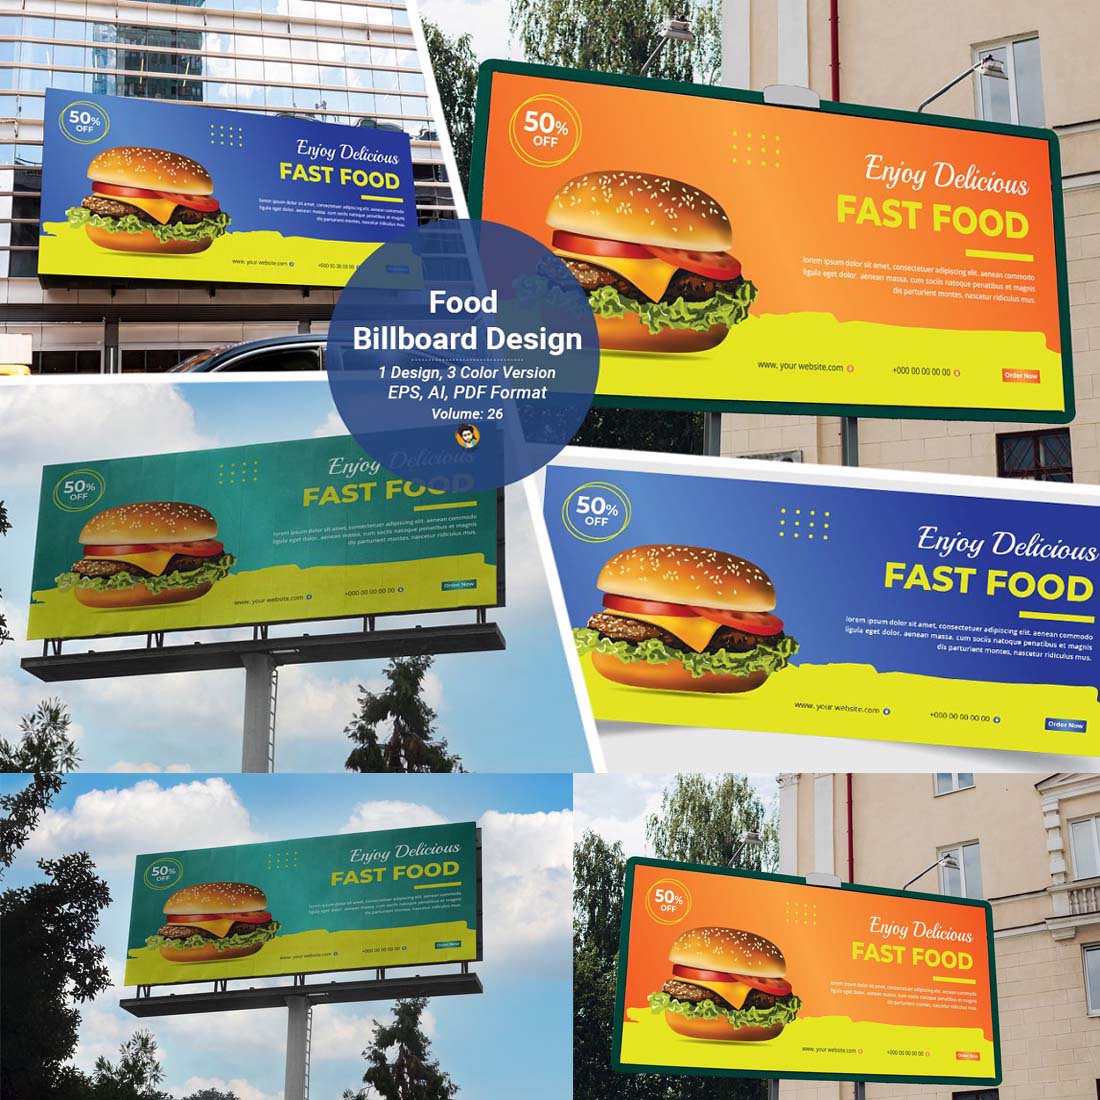 Healthy Food Billboard Design cover image.